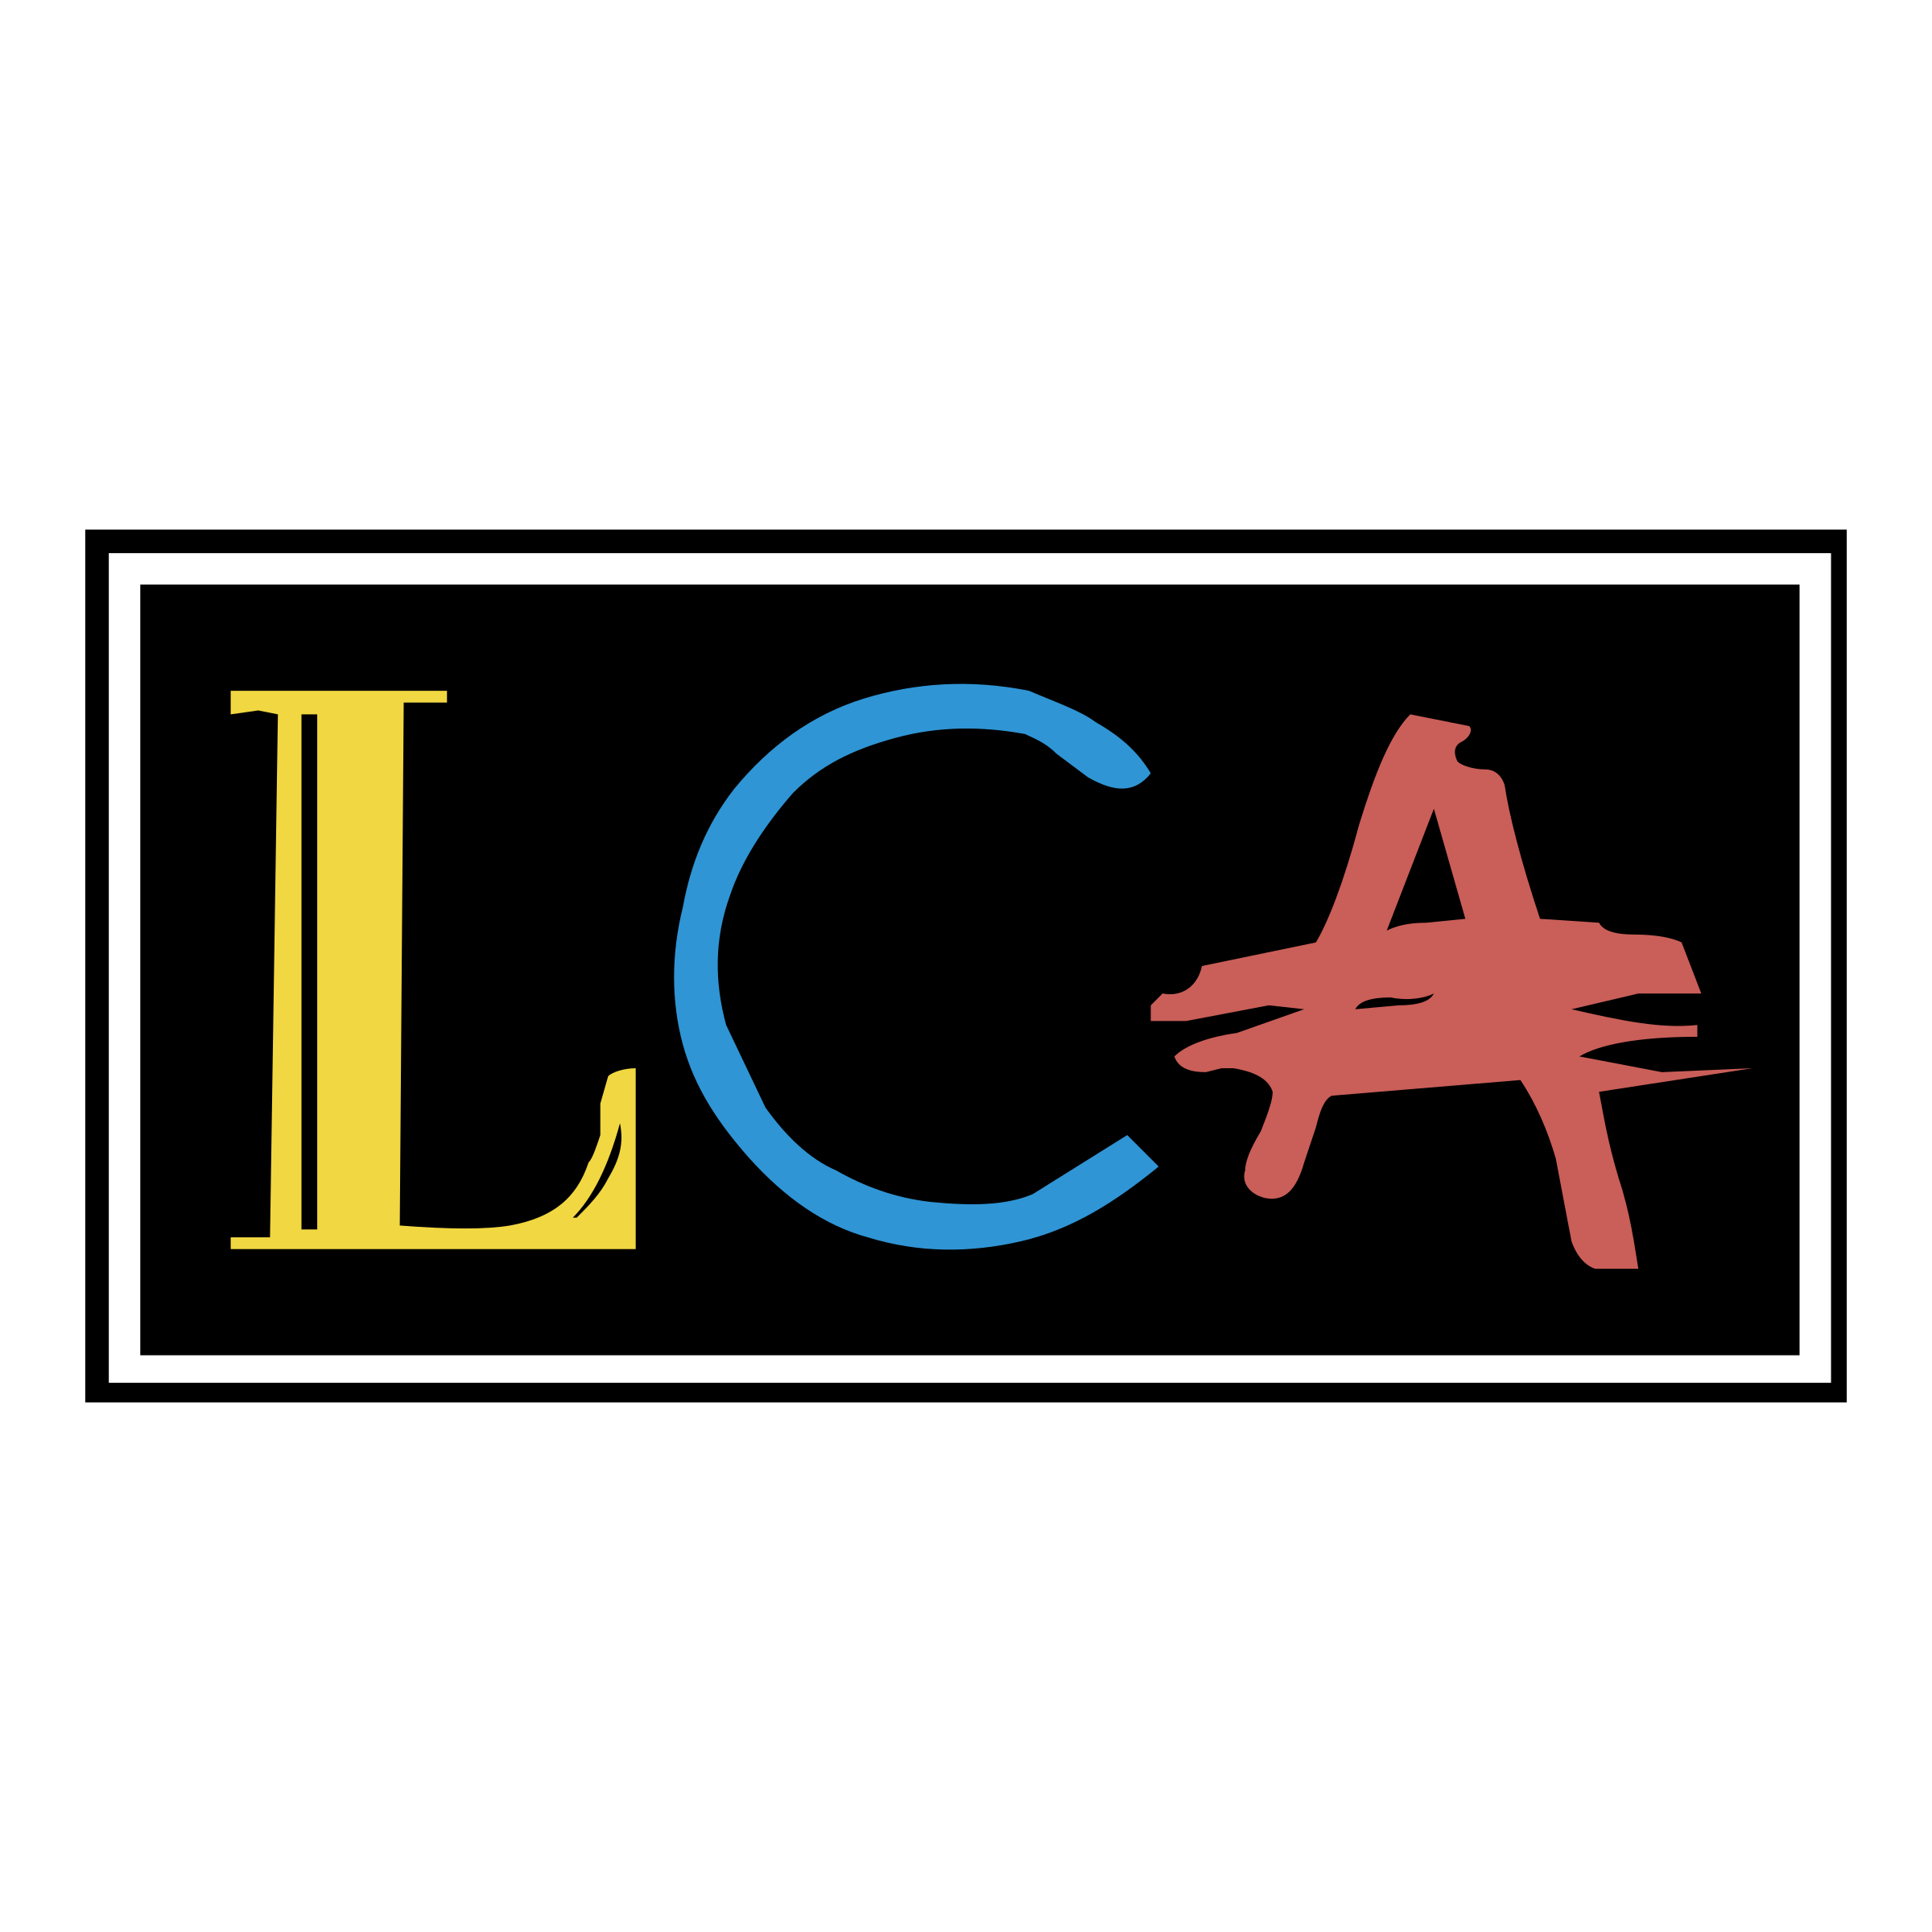 LCA Logo - LCA Logo PNG Transparent & SVG Vector - Freebie Supply